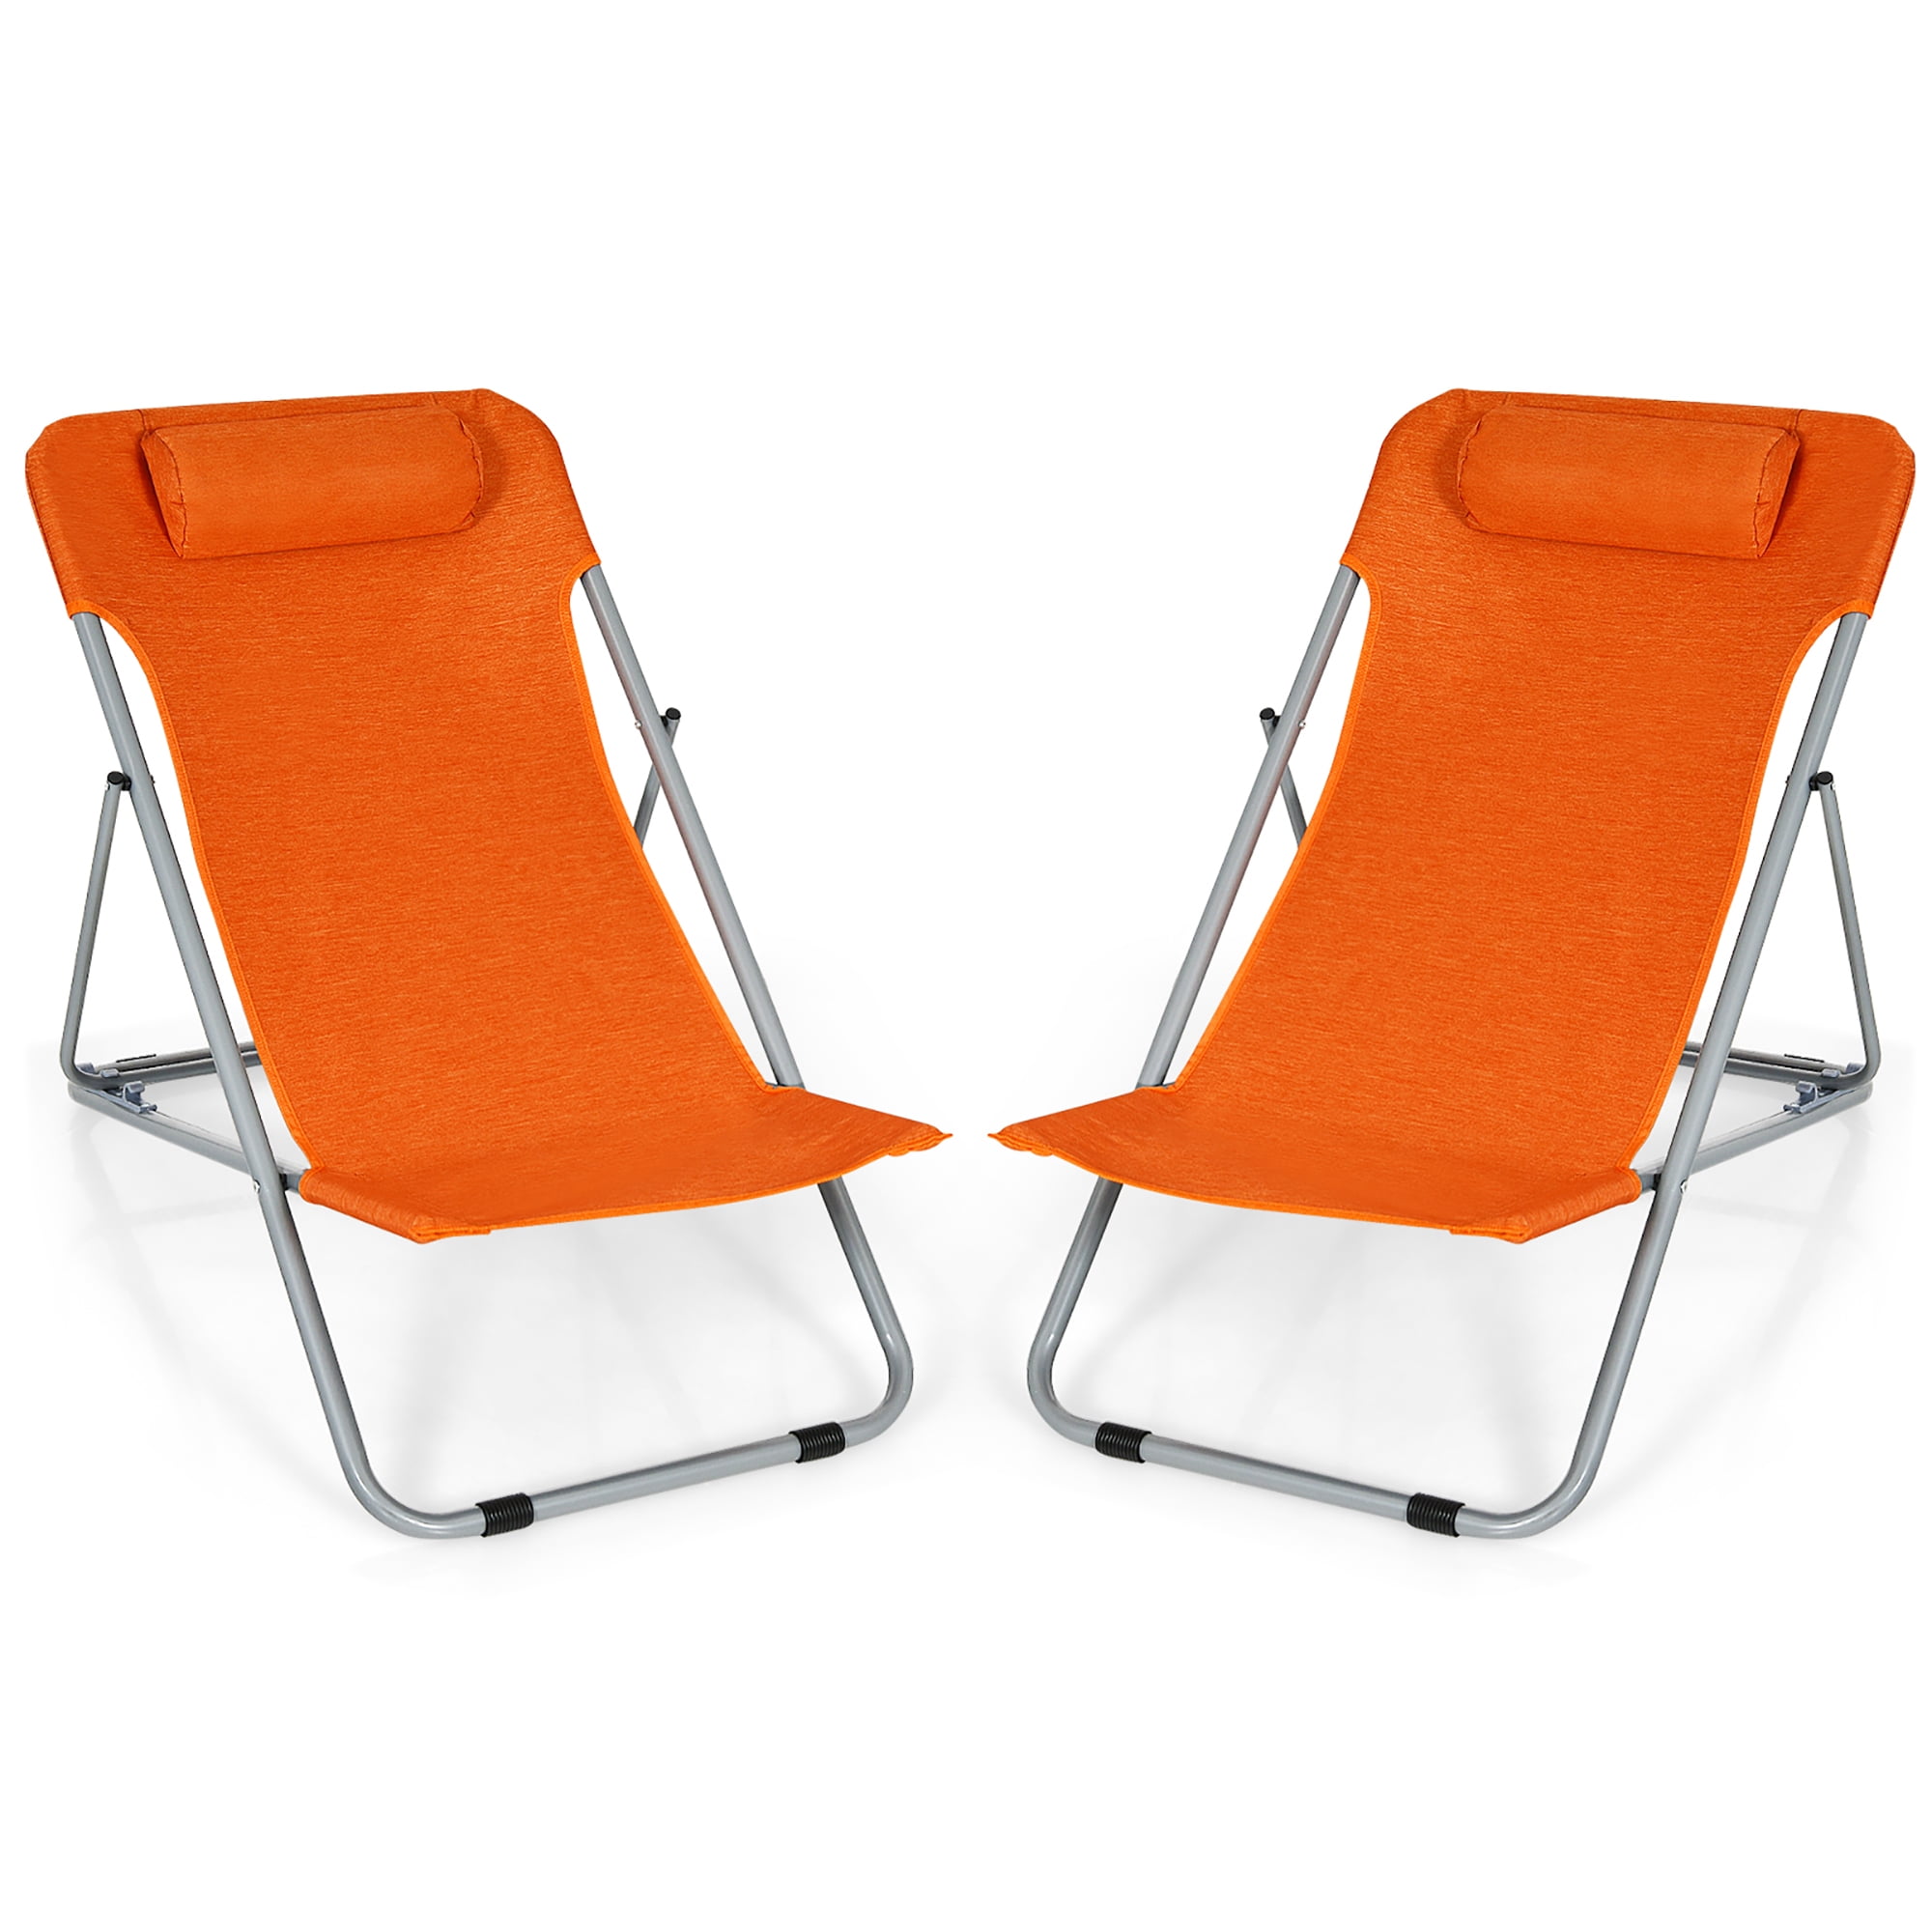 Modern Beach Chair Headrest for Small Space